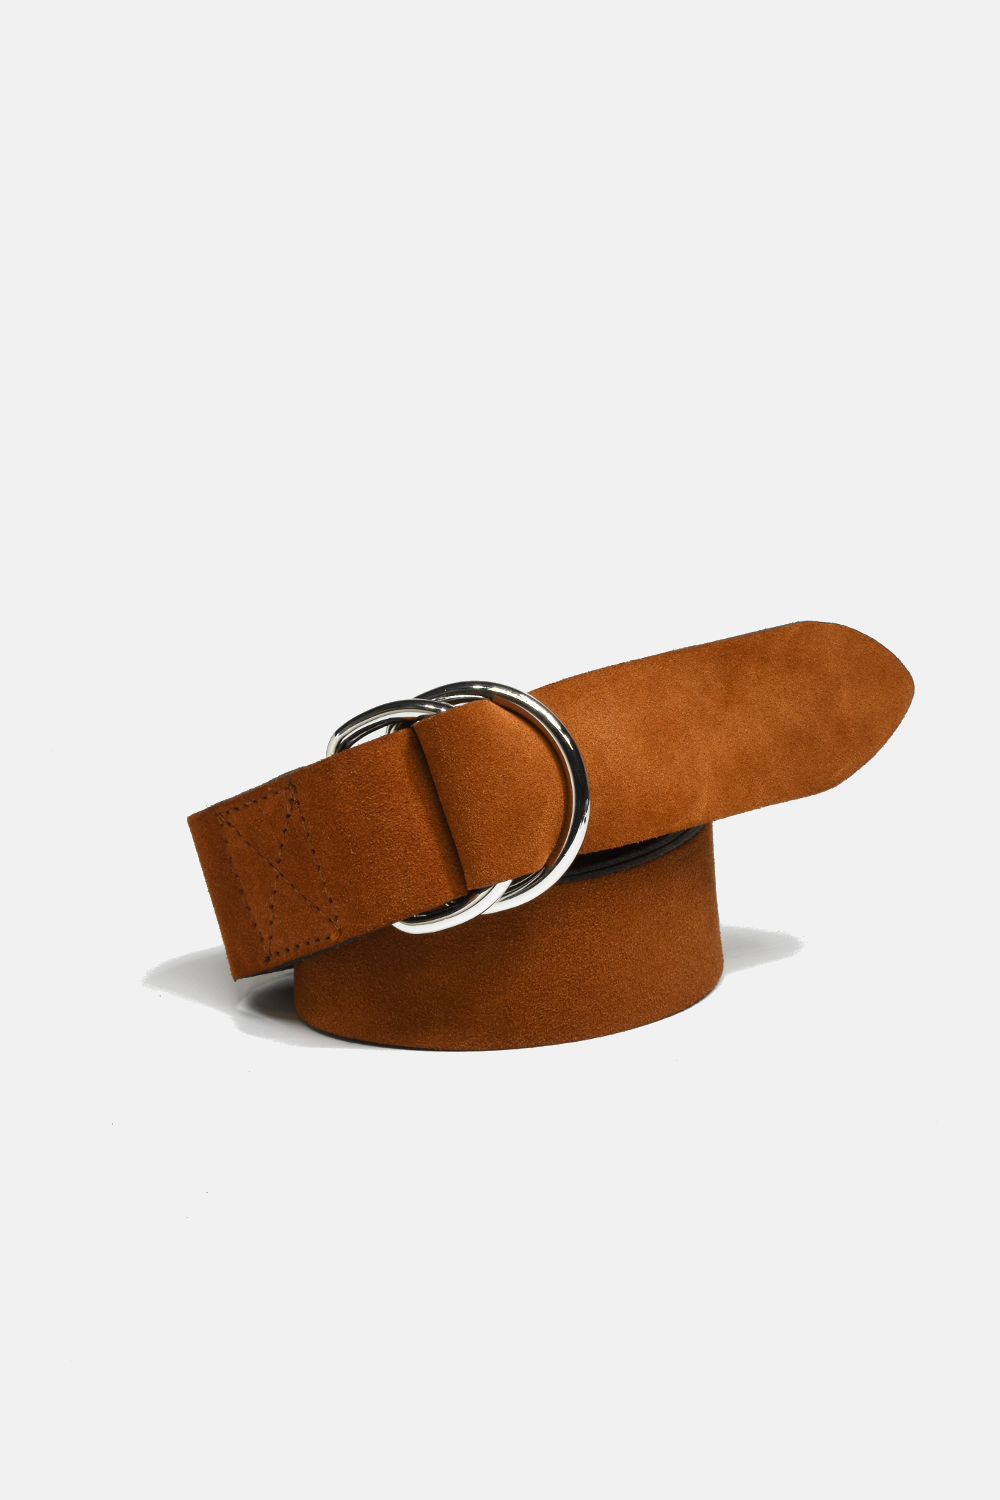 Bark Brown Suede Leather Belt